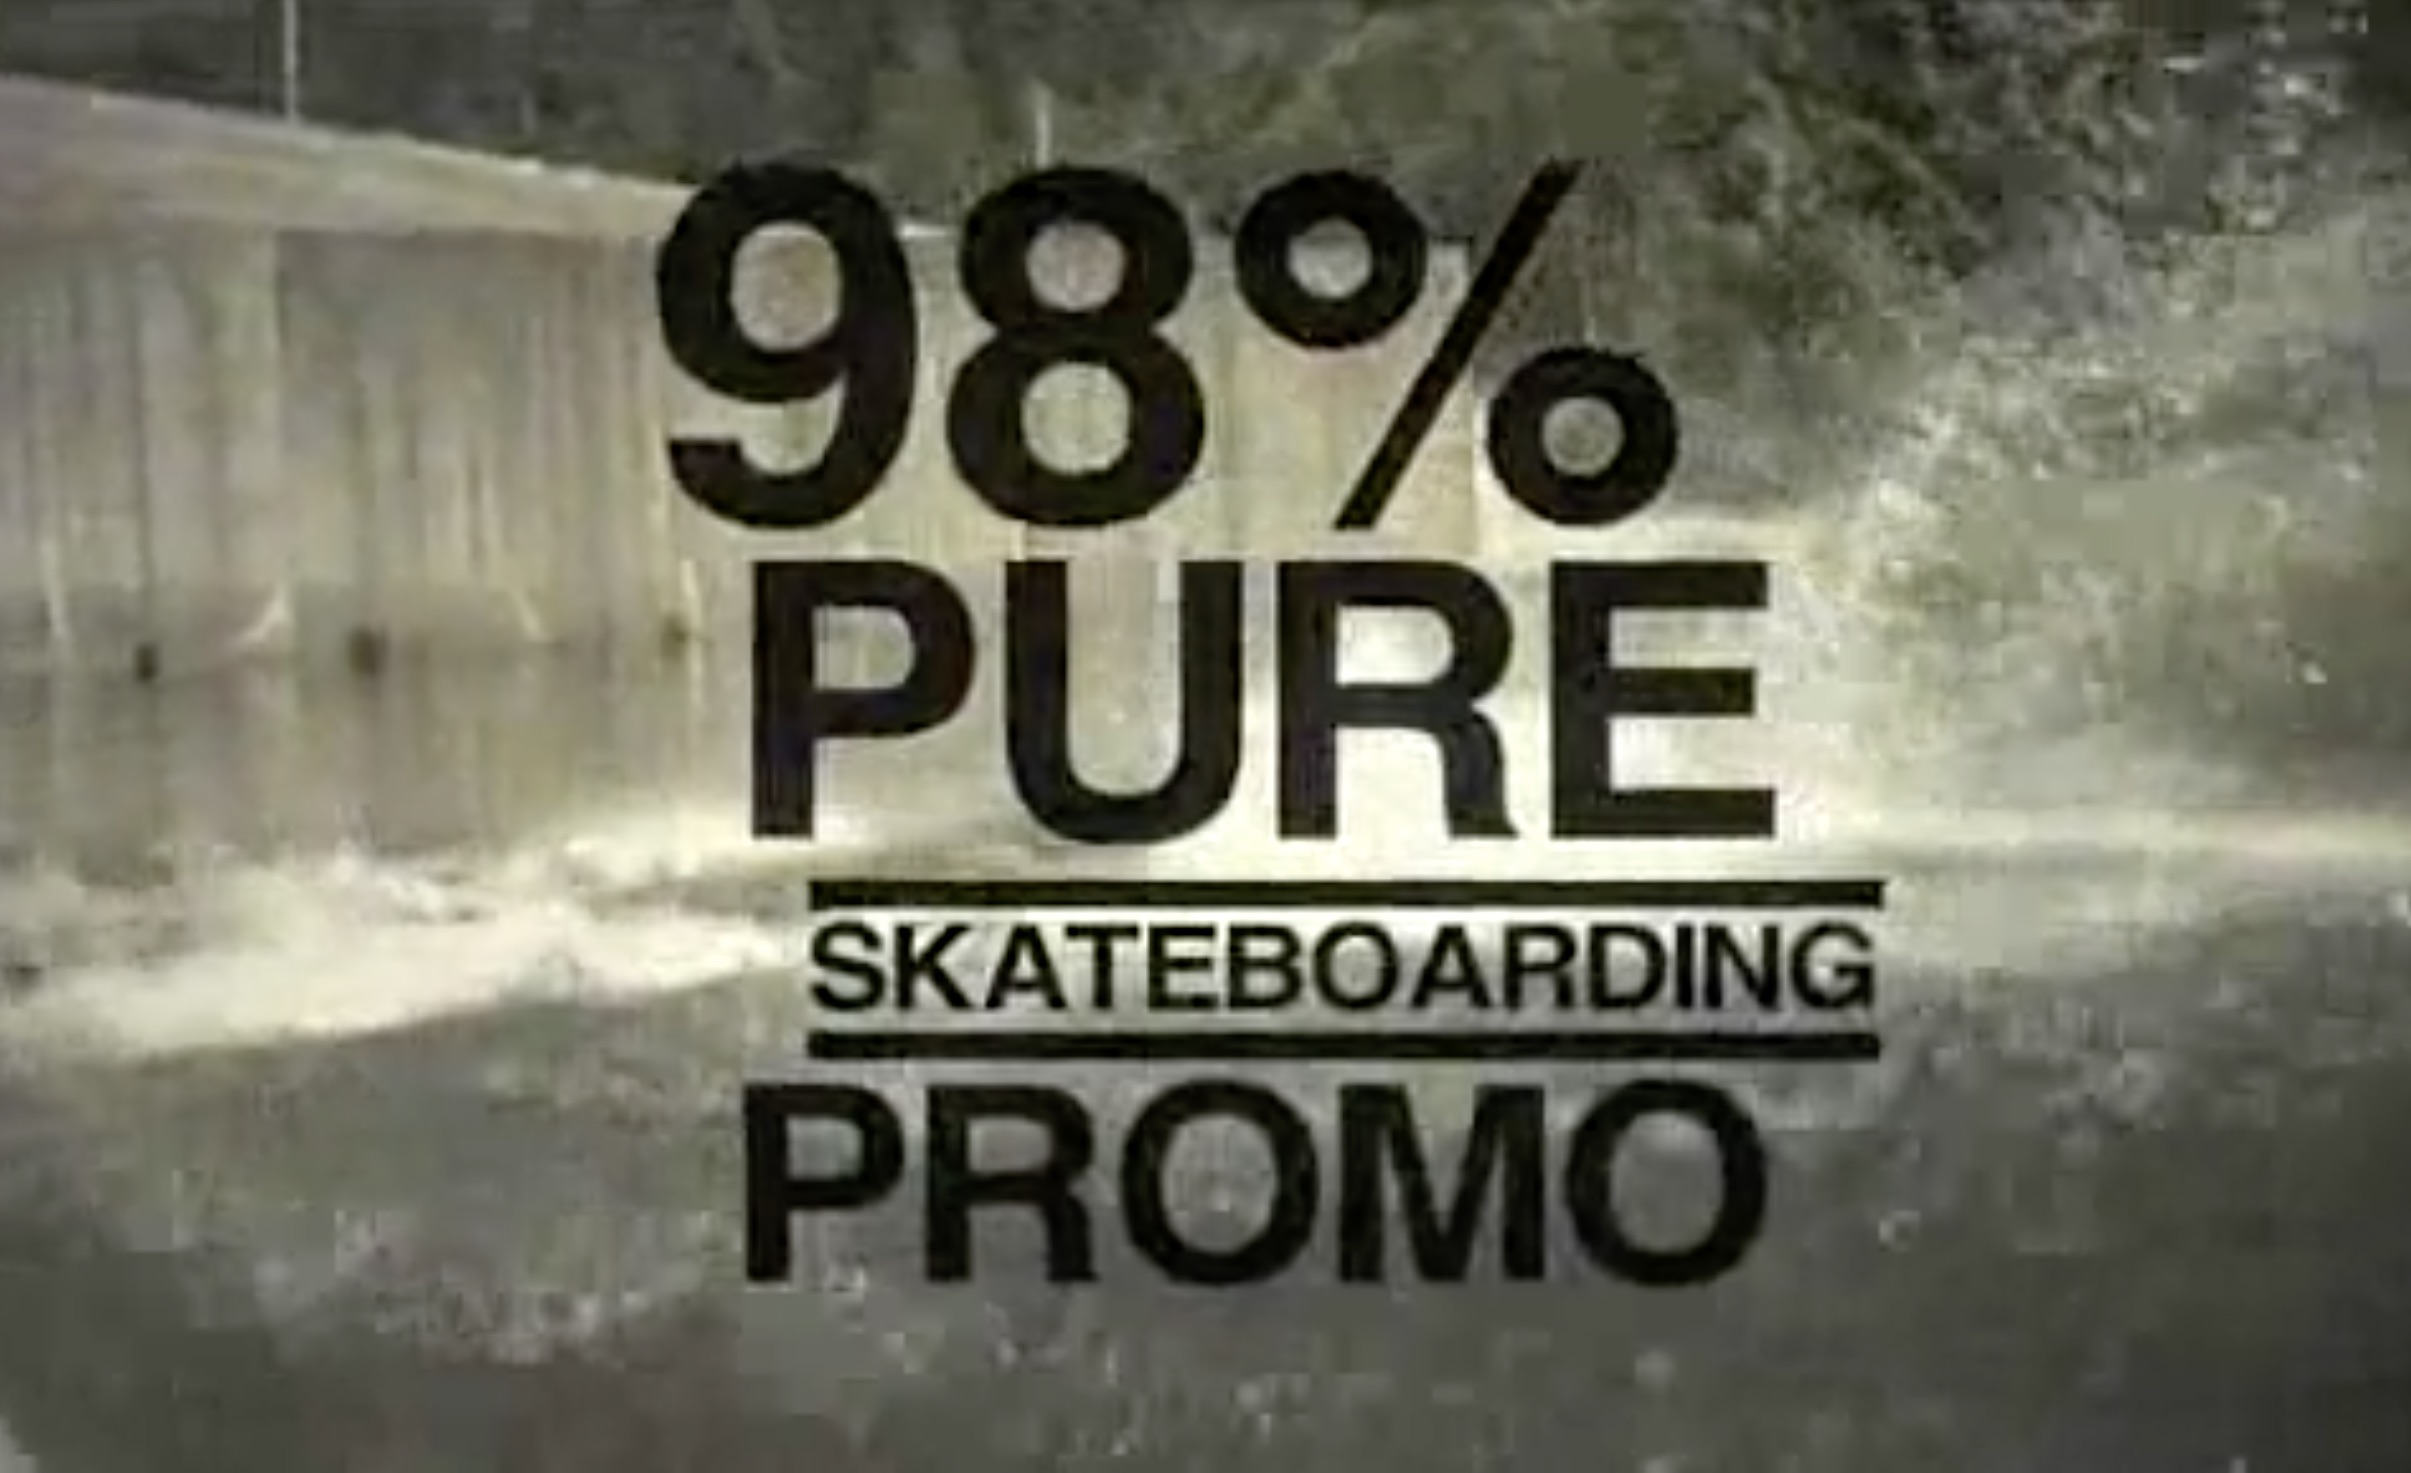 Premium - 98% Pure Skateboarding Promo cover